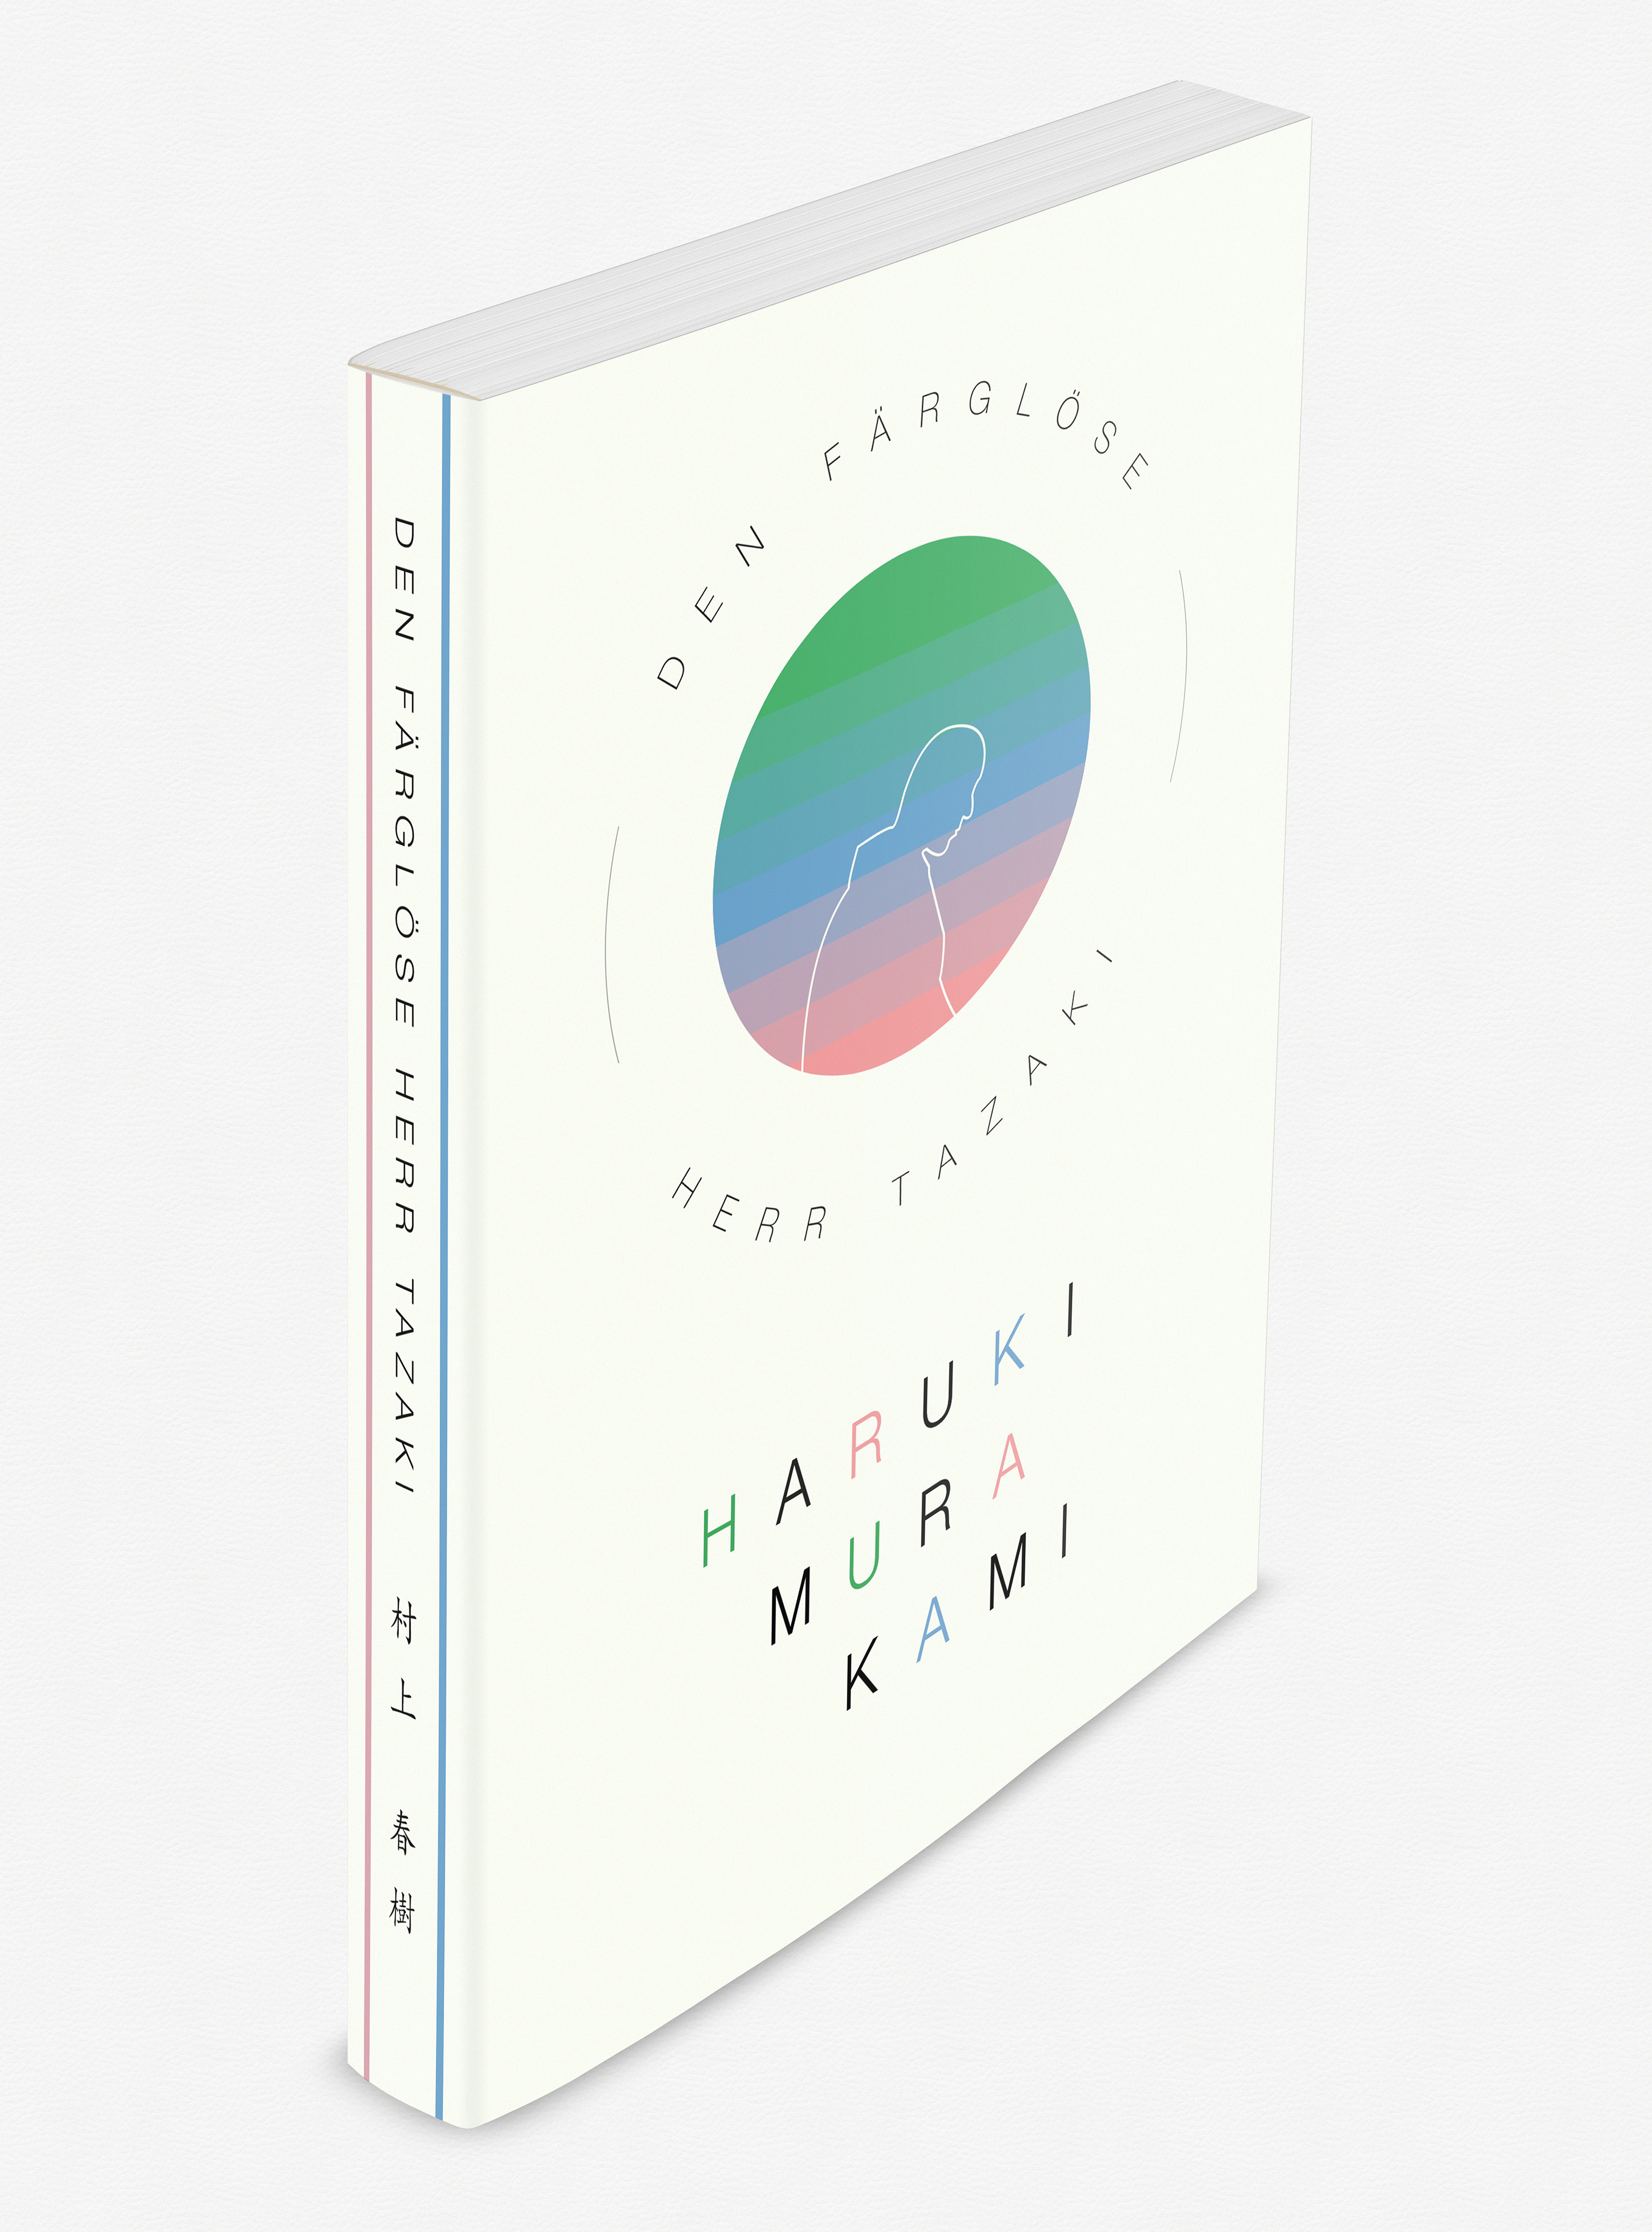 Book cover I made for the book Colorless Tsukuru Tazaki and His Years of Pilgrimage by Haruki Murakami.